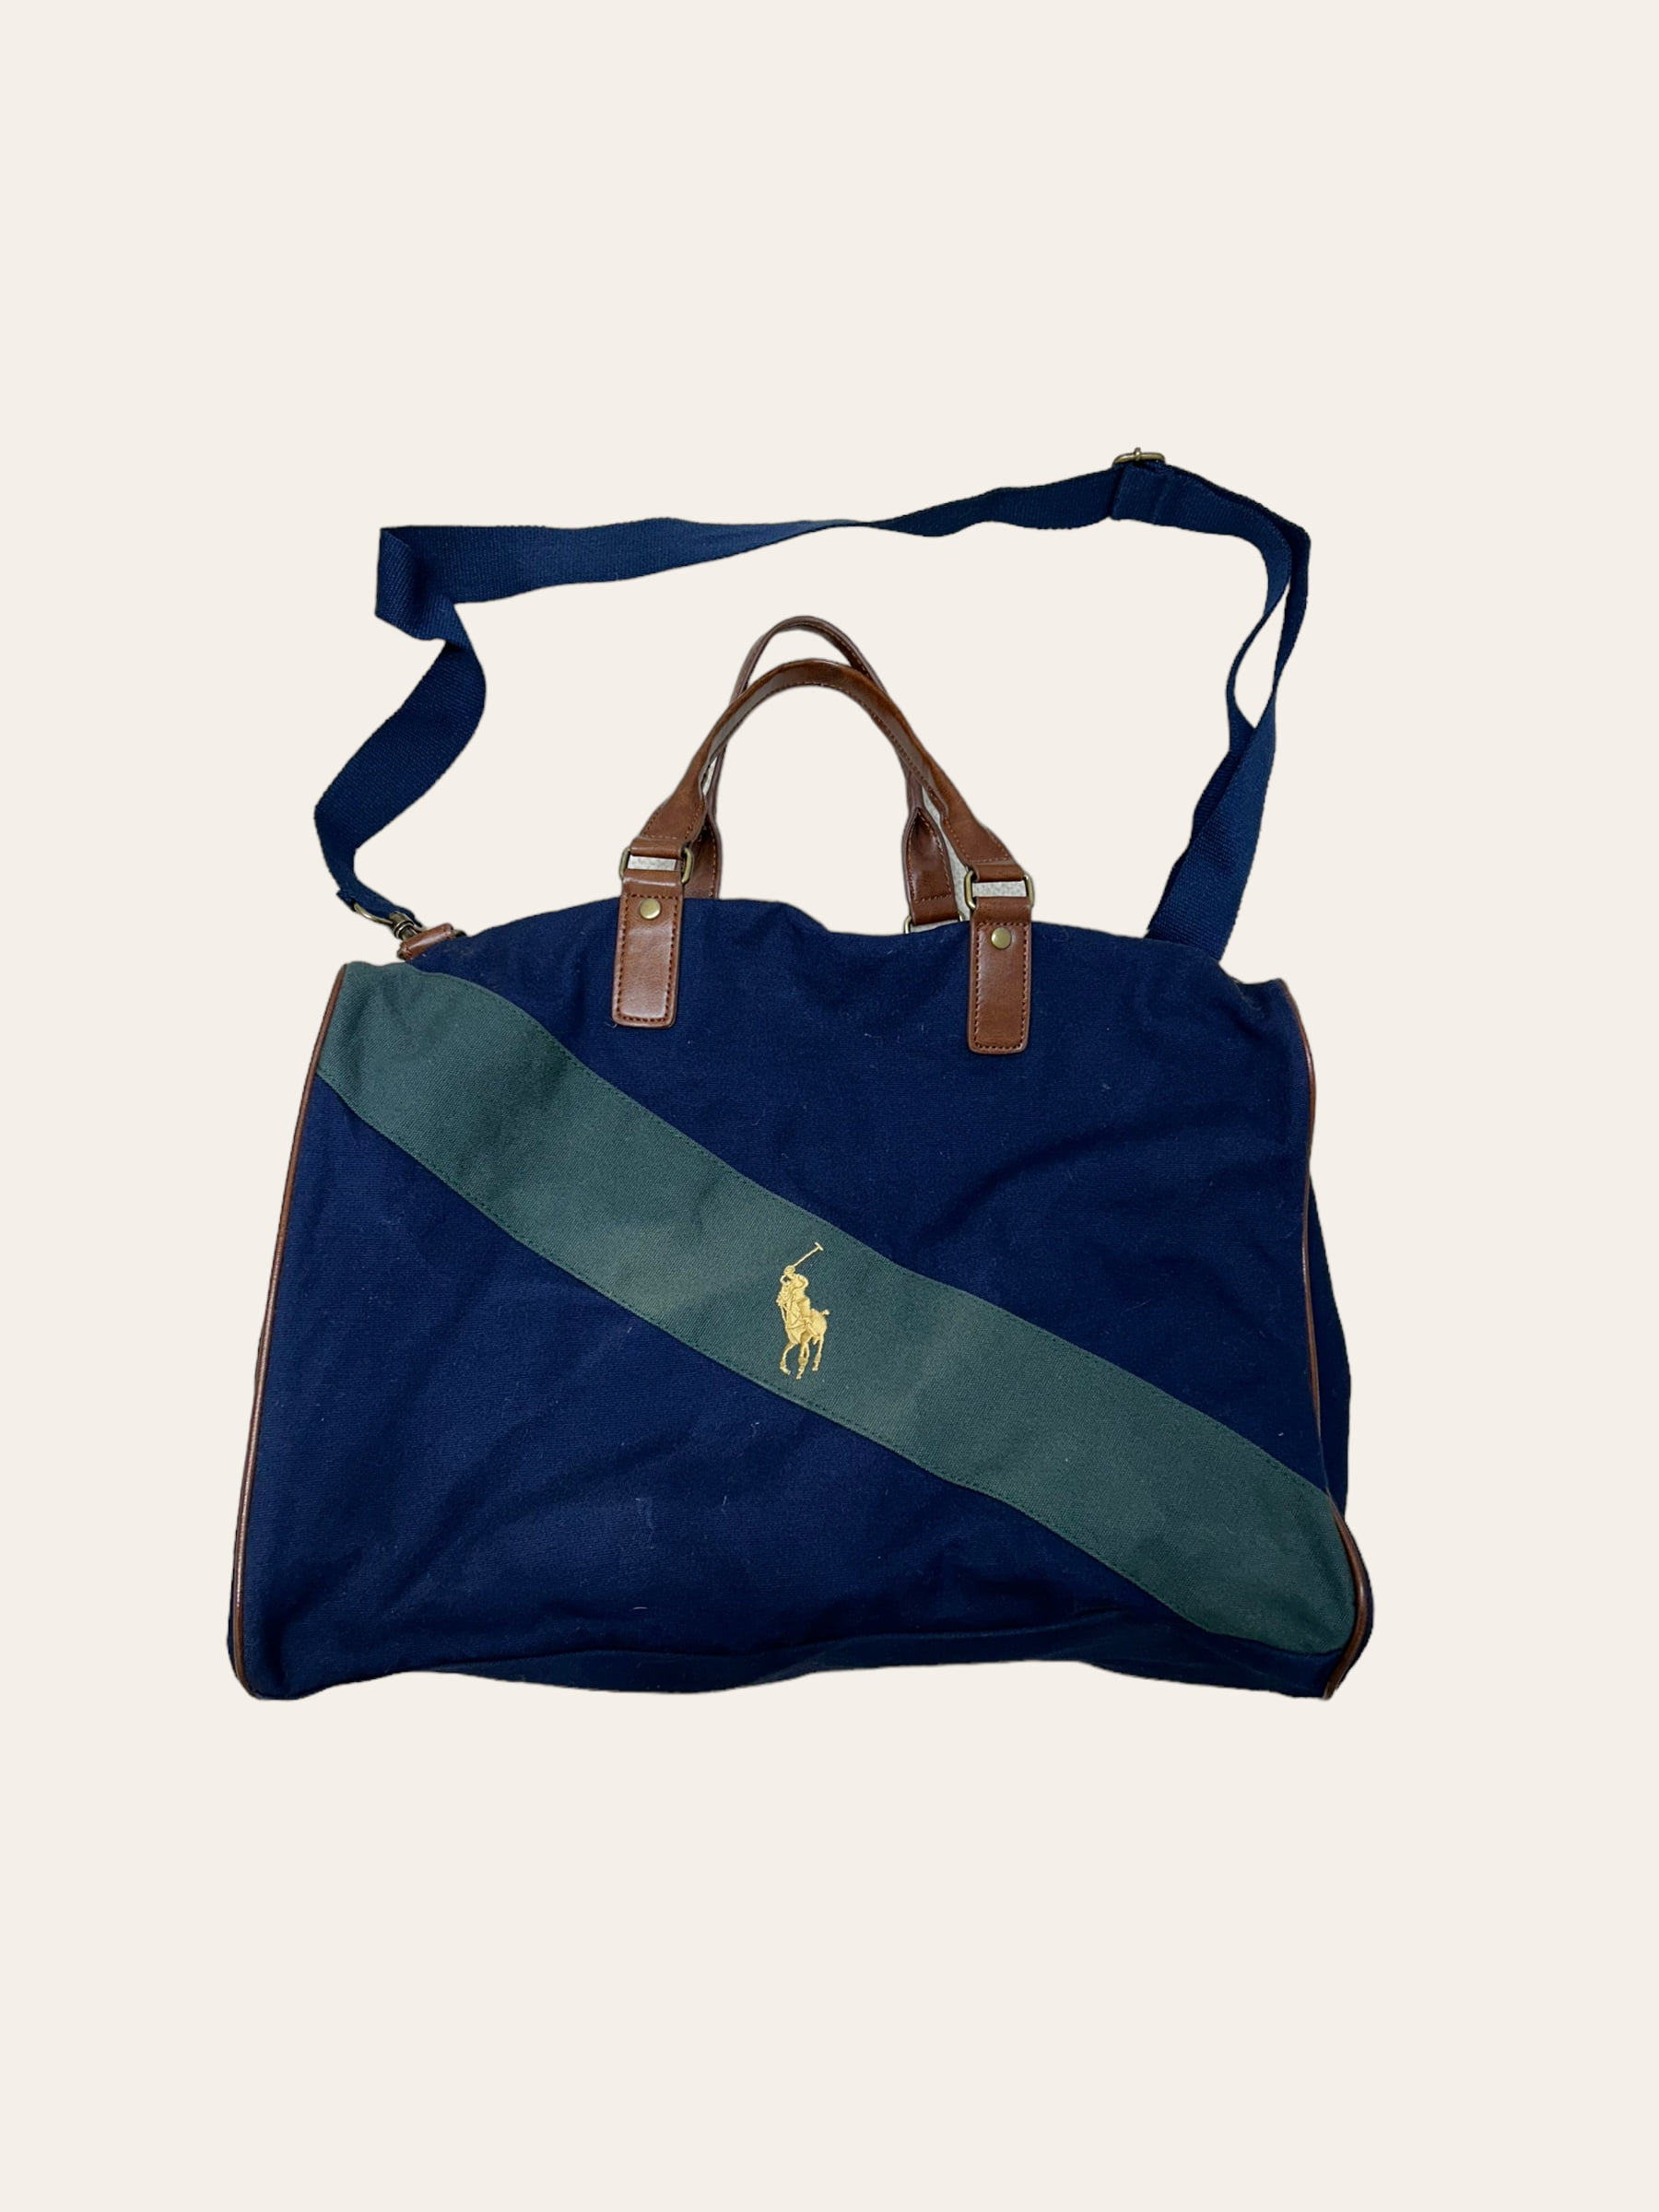 Polo ralph lauren navy travel bag